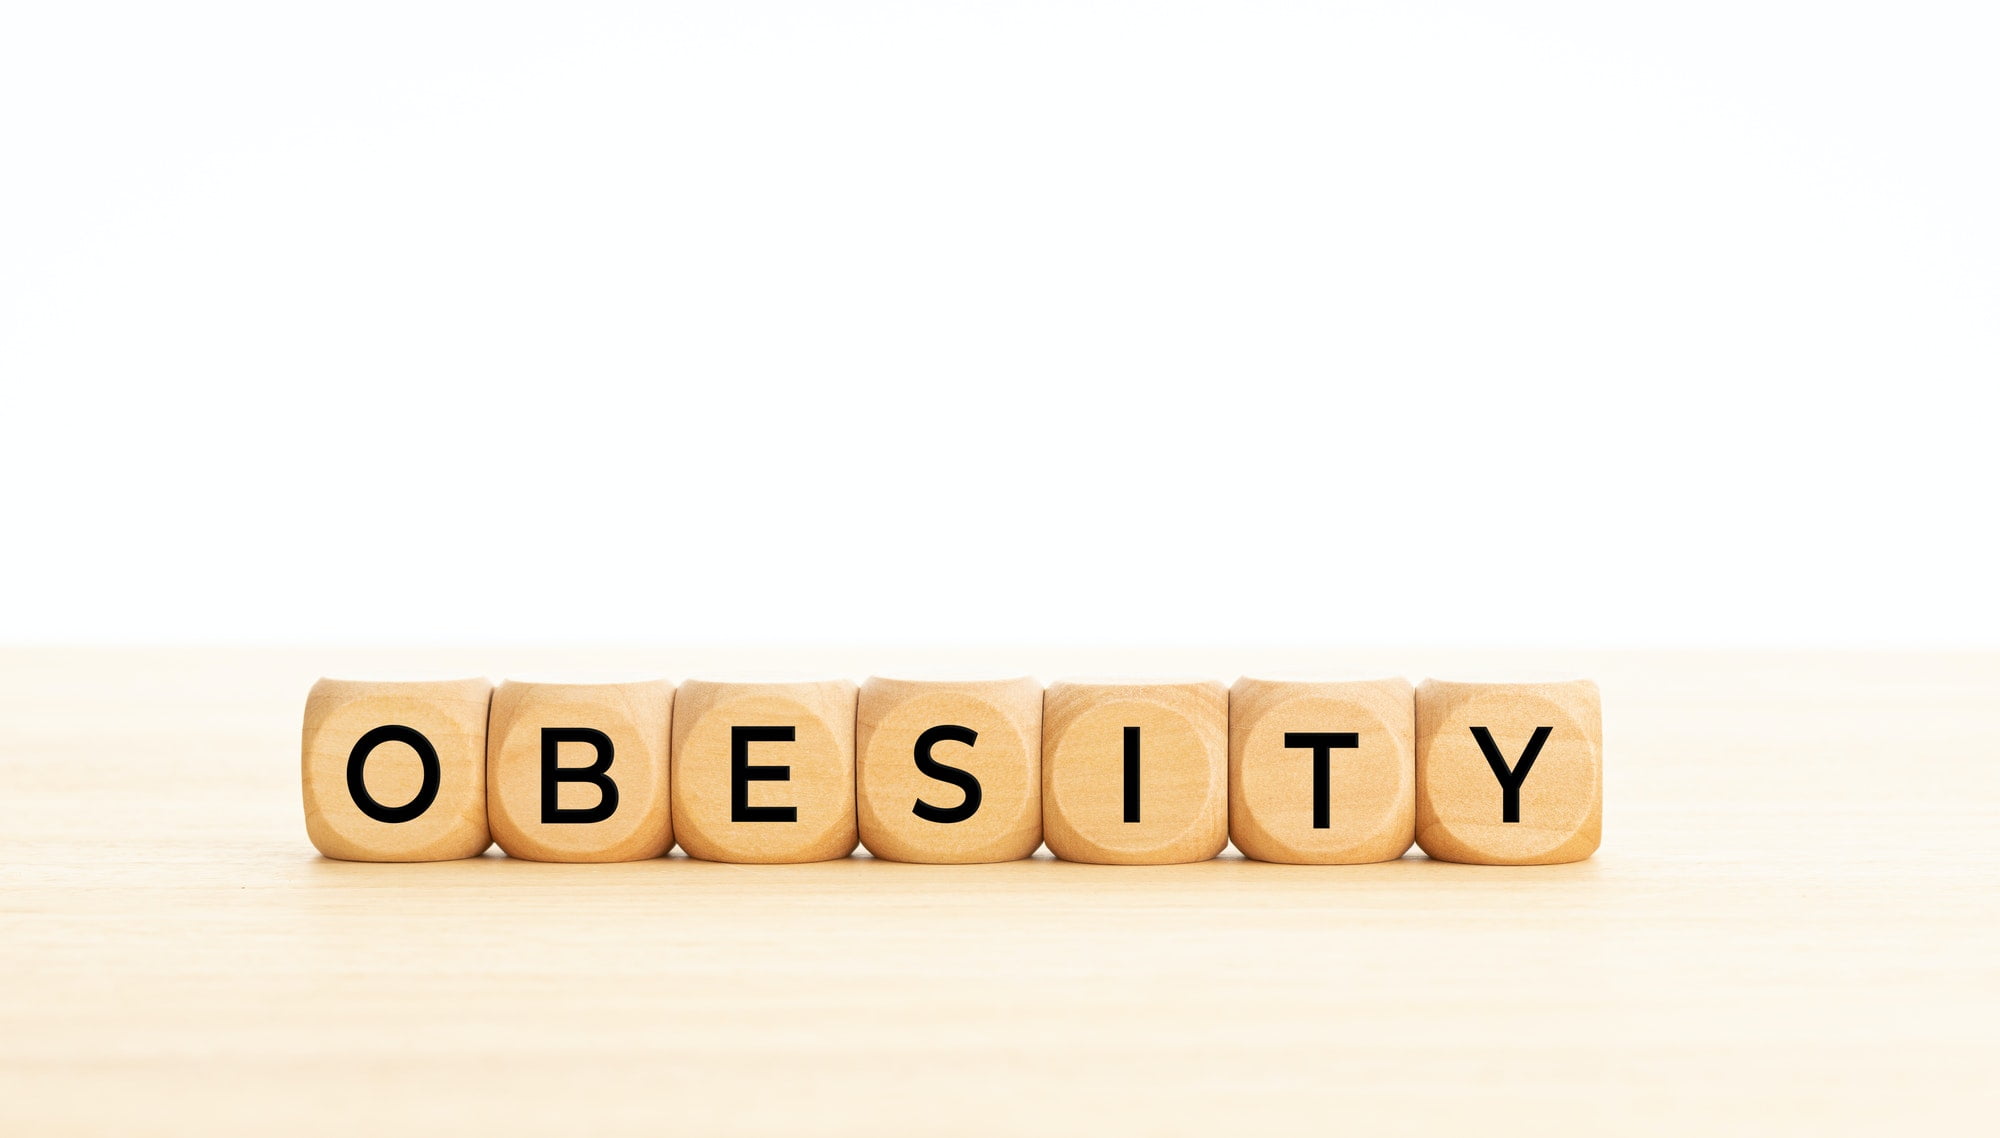 Gojaznost Obesity word on wooden block